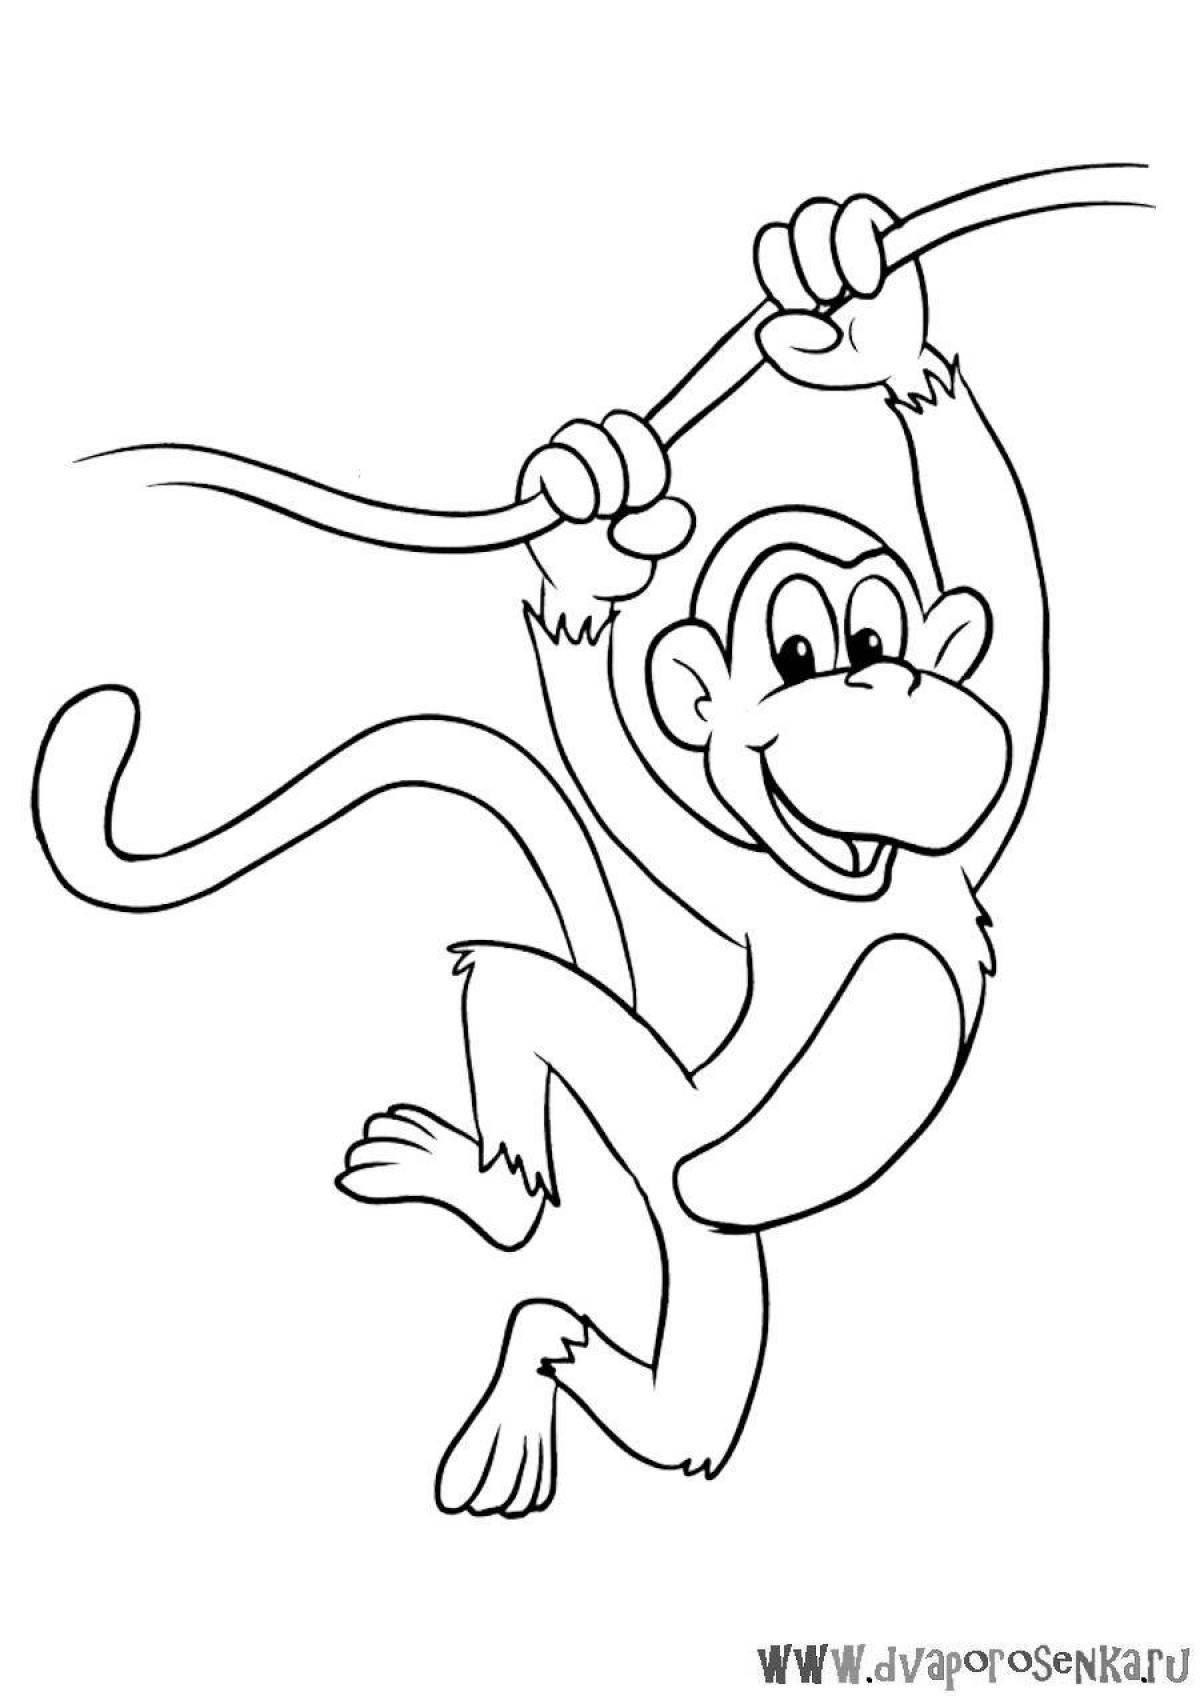 Яркая раскраска обезьяна для детей